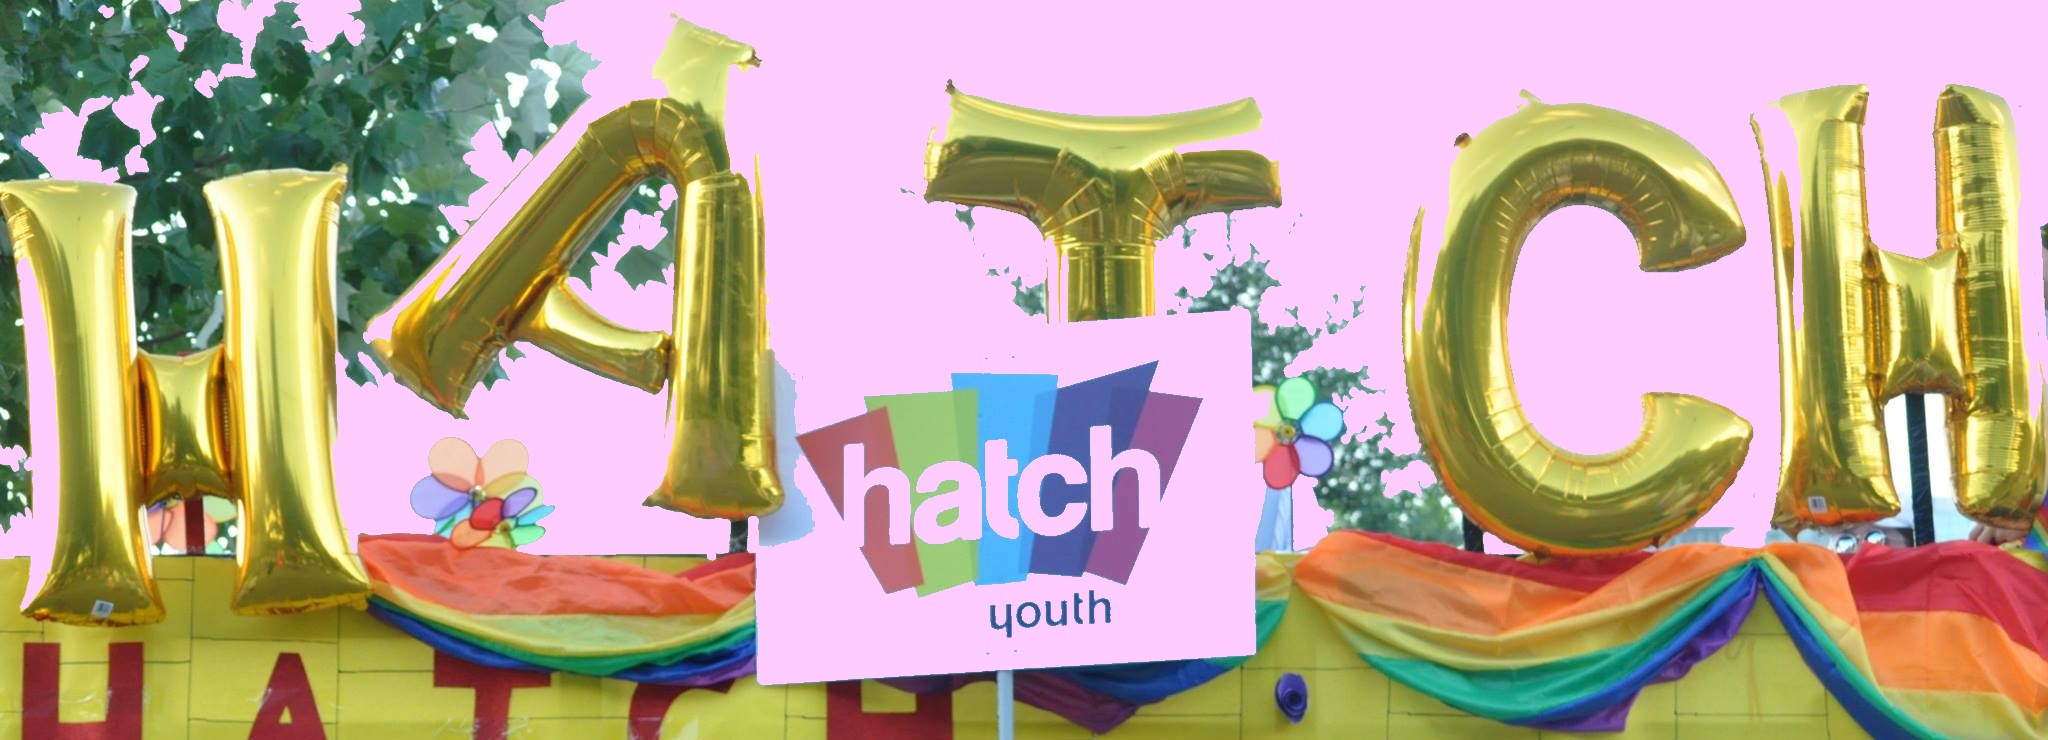 Hatch Youth